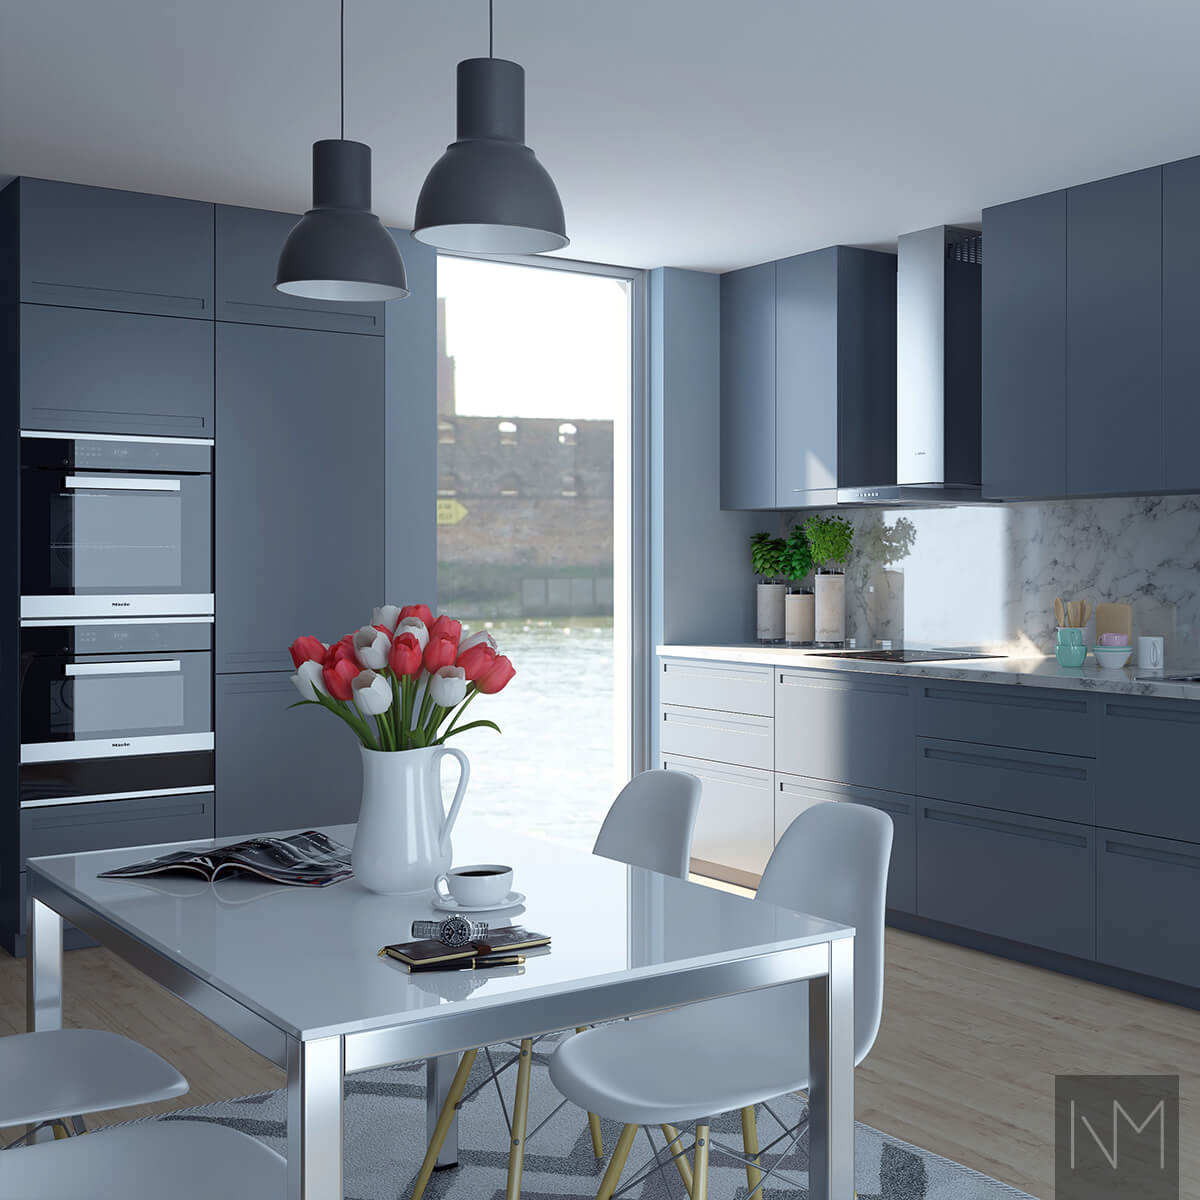 Cucina IKEA Metod o Faktum Basic. Colore NCS S6010-R90B o Jotun Elegant Blue 4638.